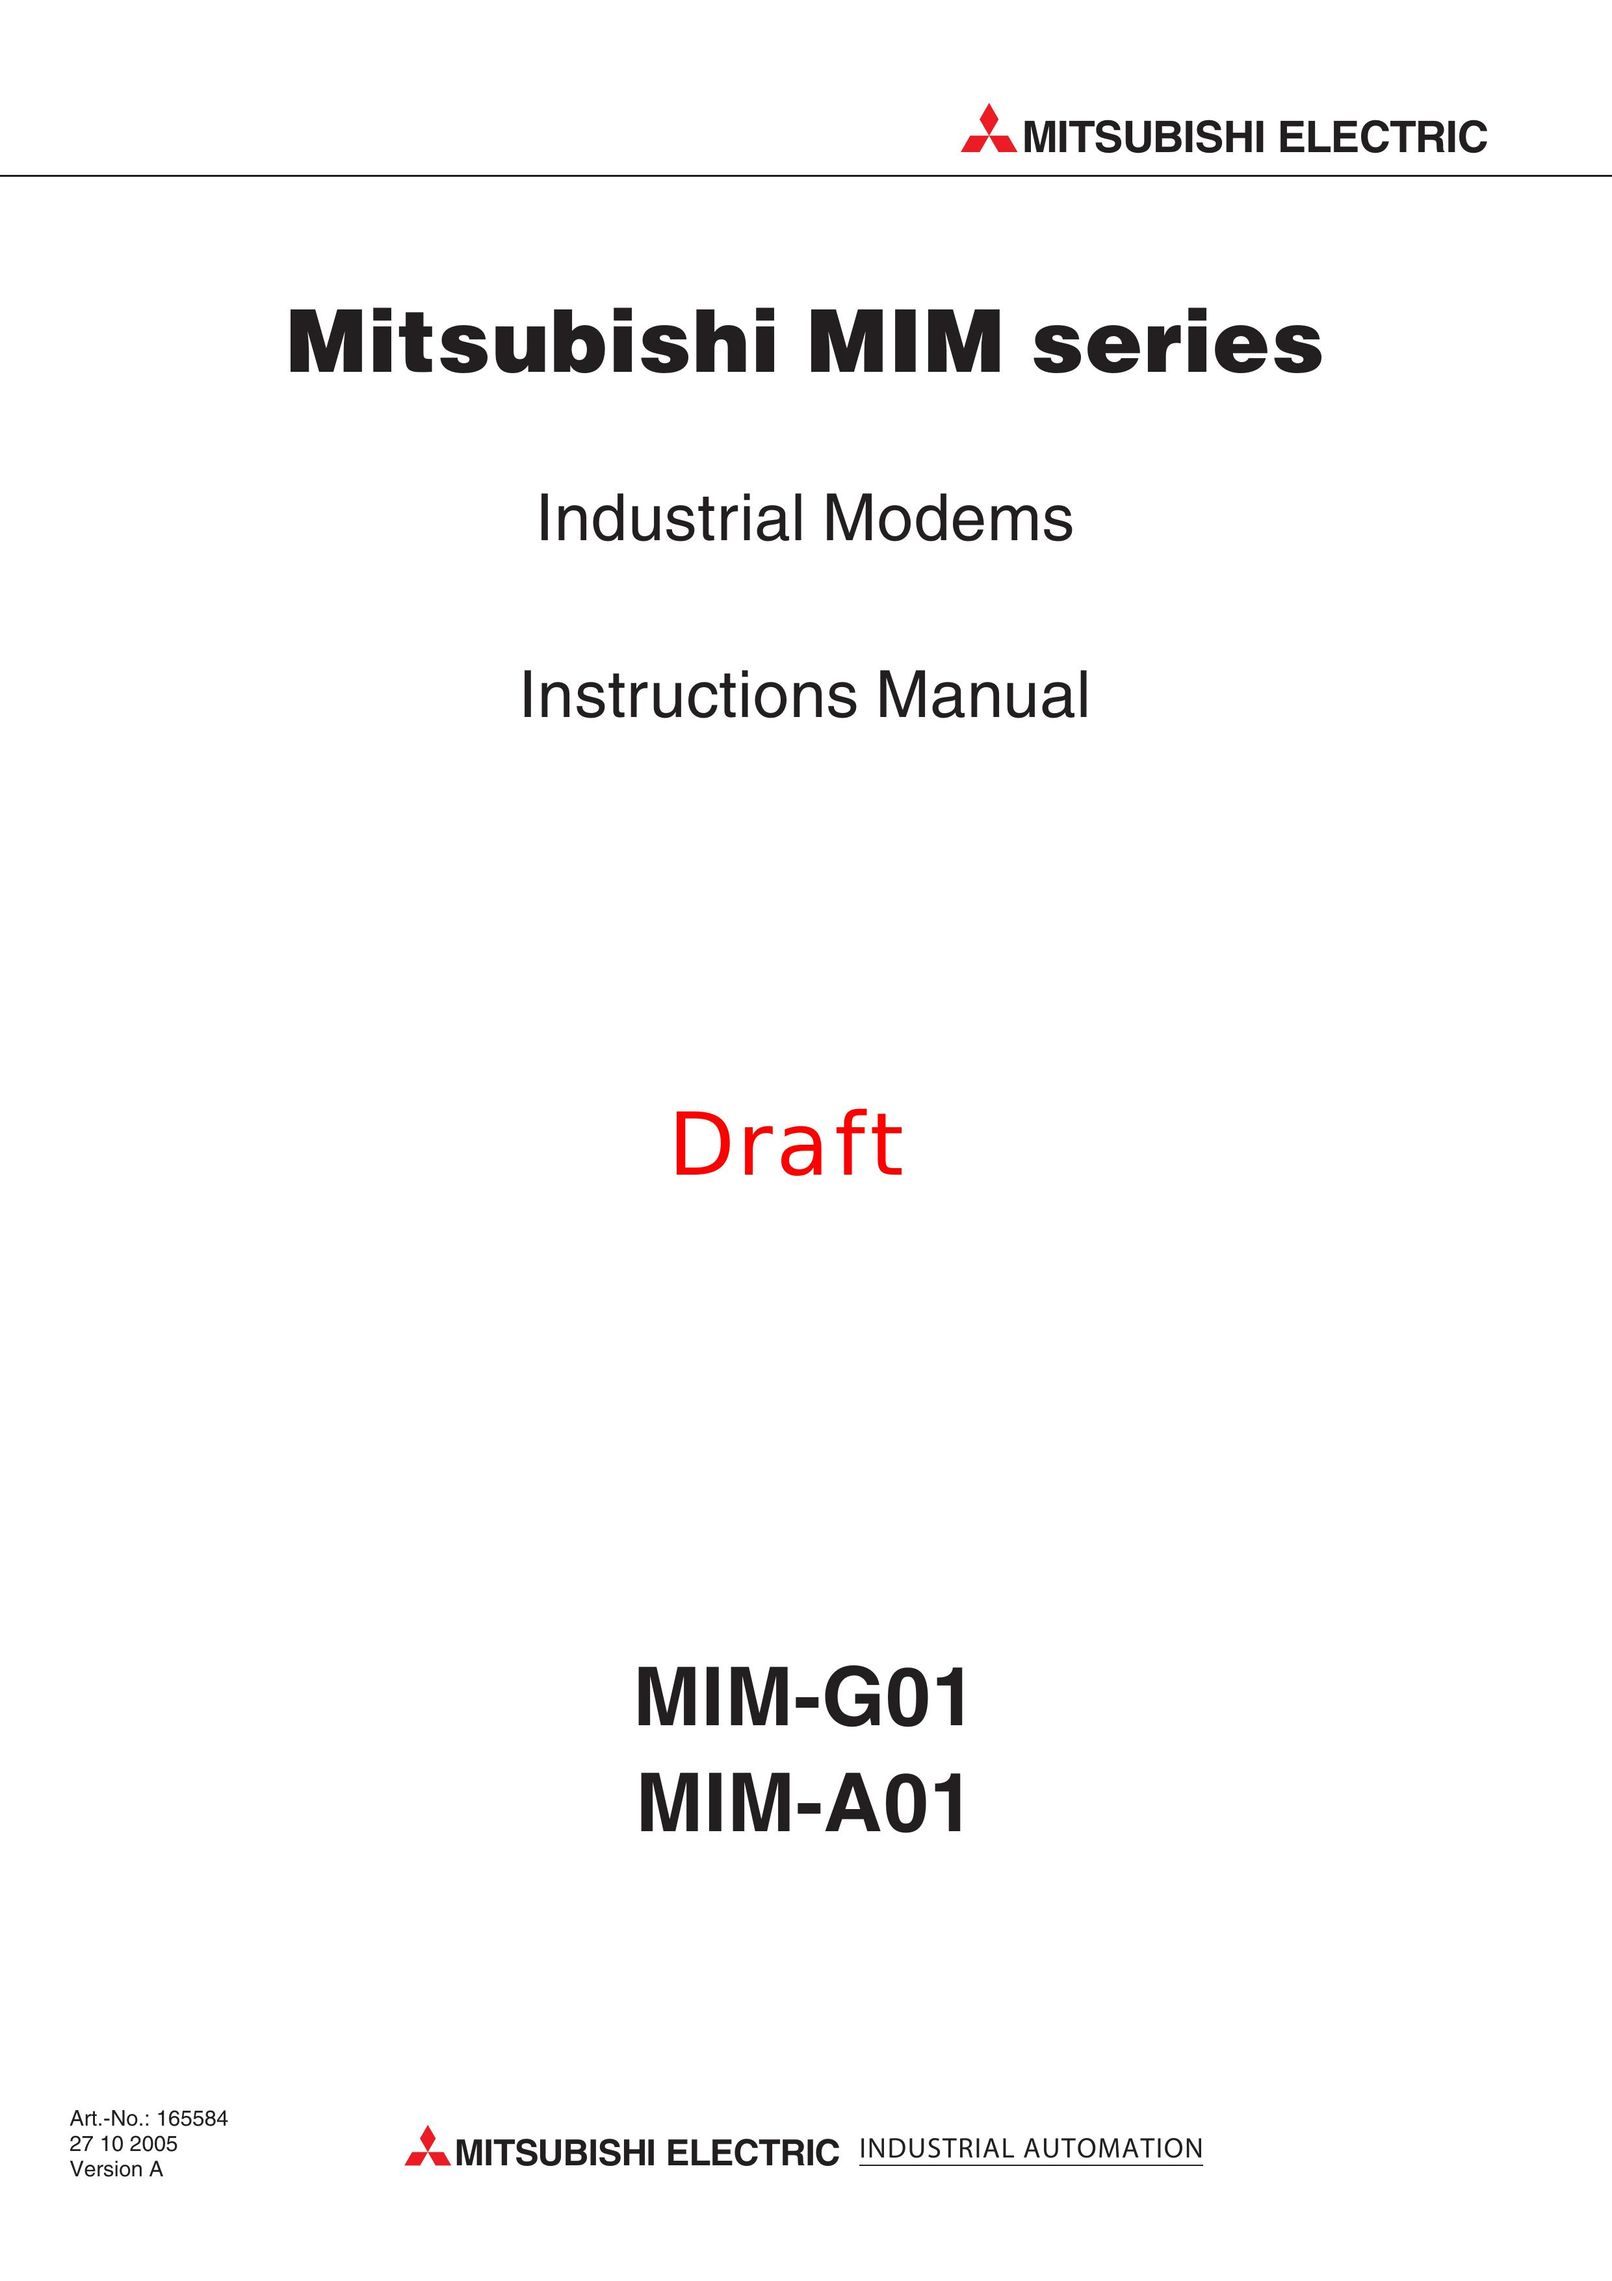 Mitsubishi Electronics MIM-G01 Modem User Manual